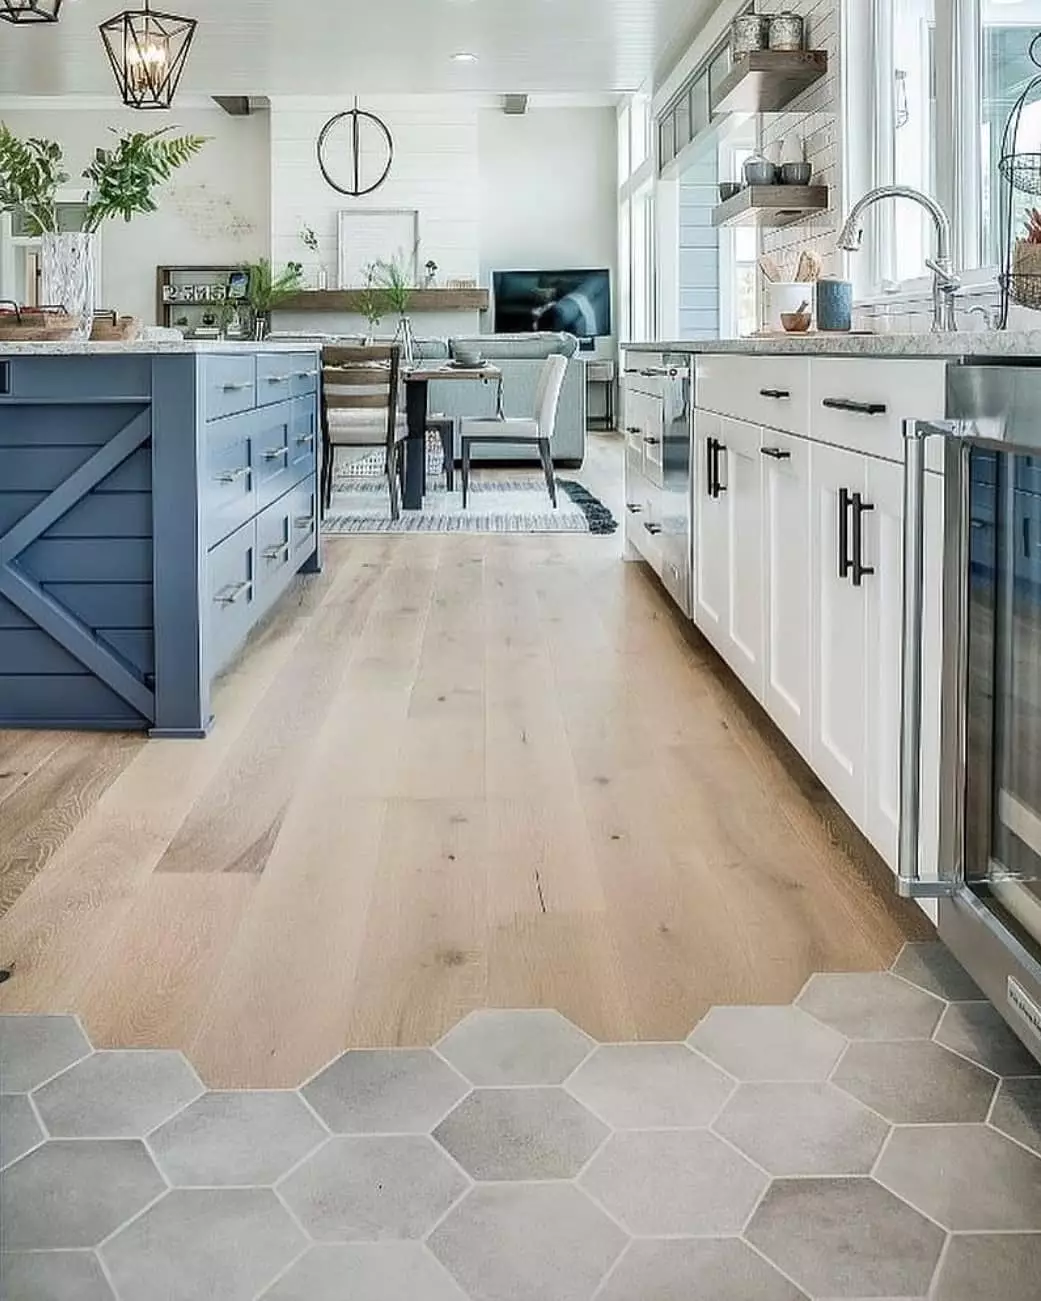 15 small kitchen tile ideas  Kitchen flooring, Kitchen floor plans, Kitchen  remodeling projects